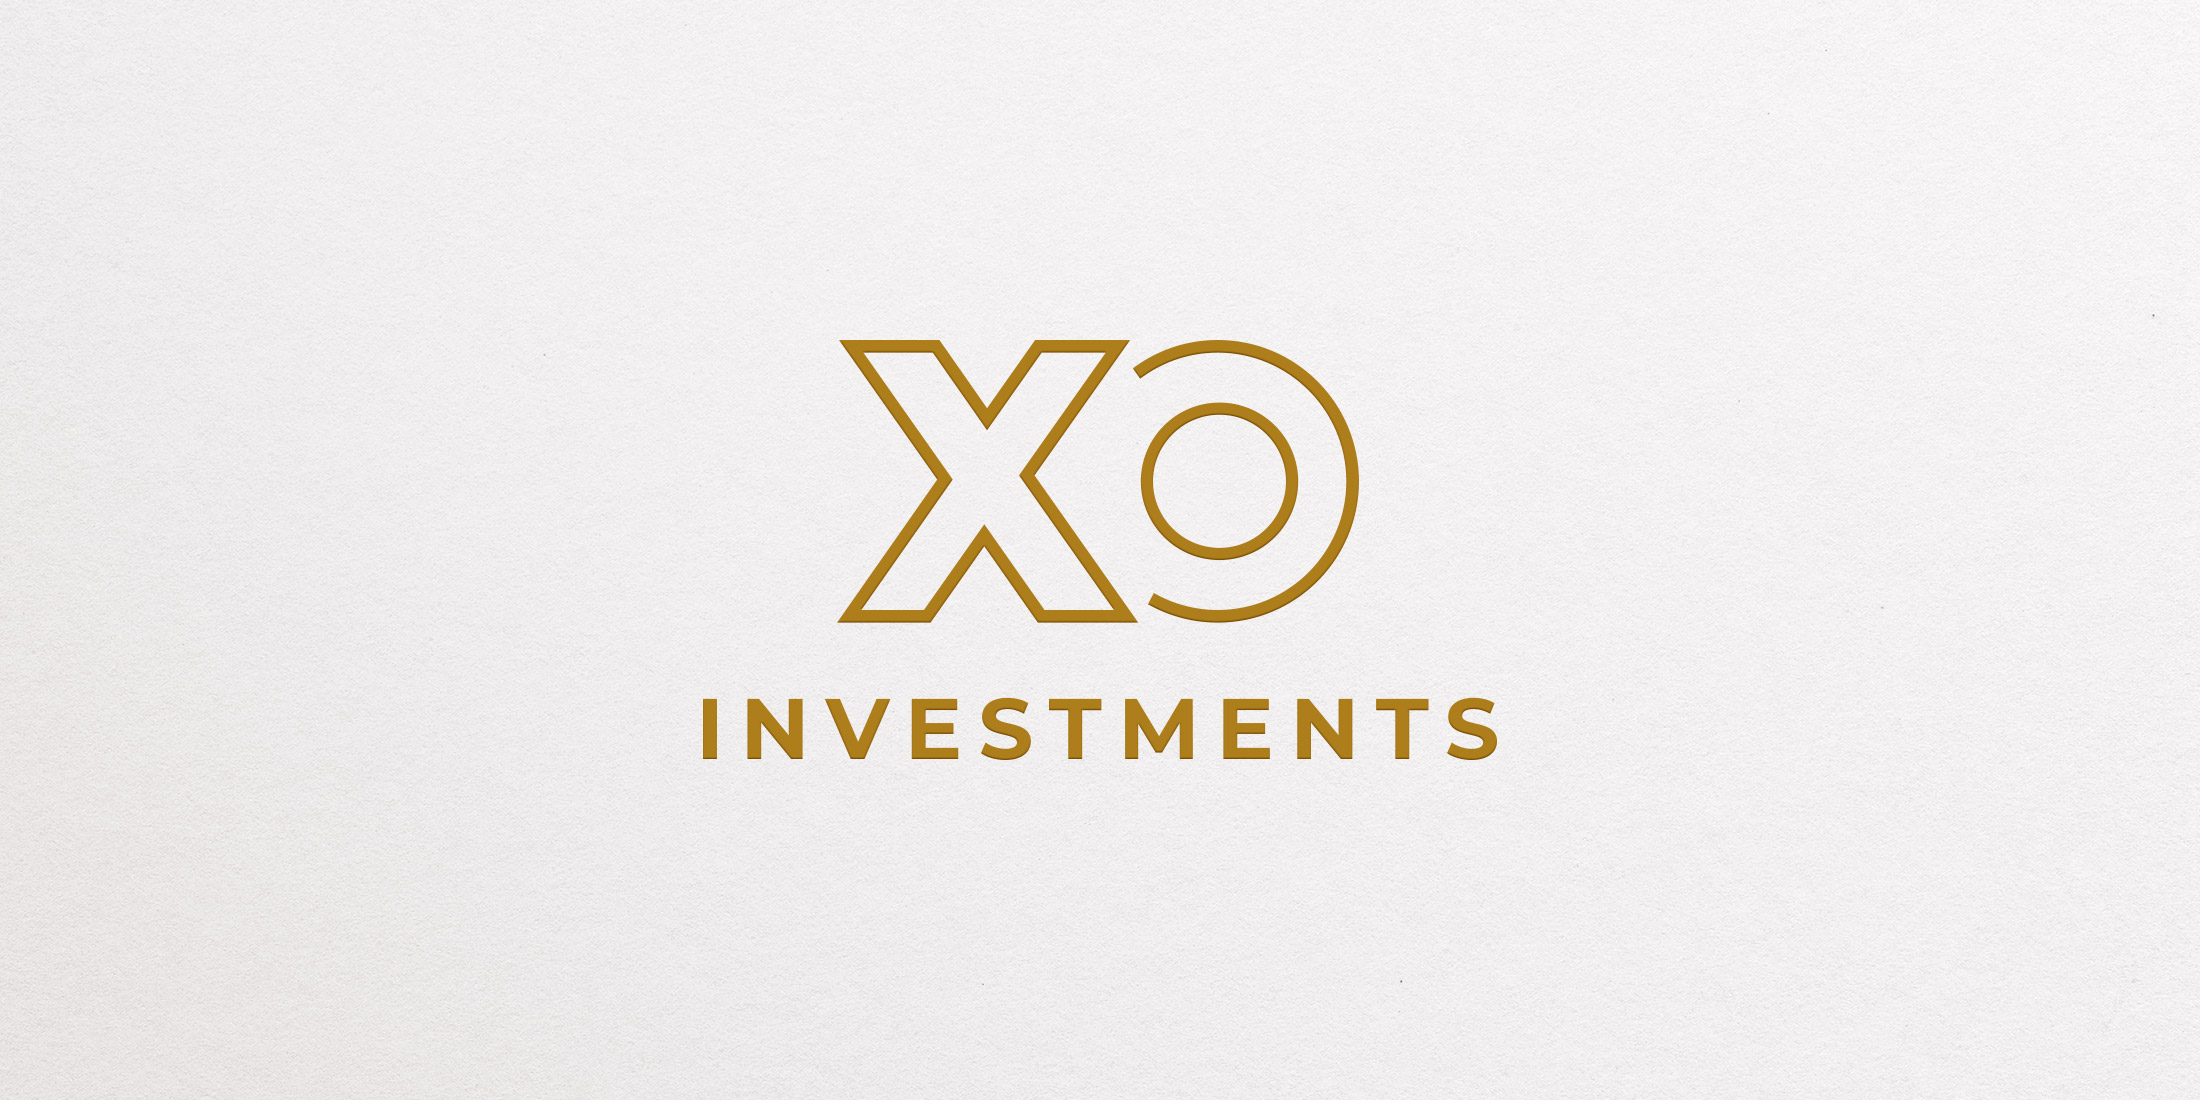 PolarGraphic - XO investments logo